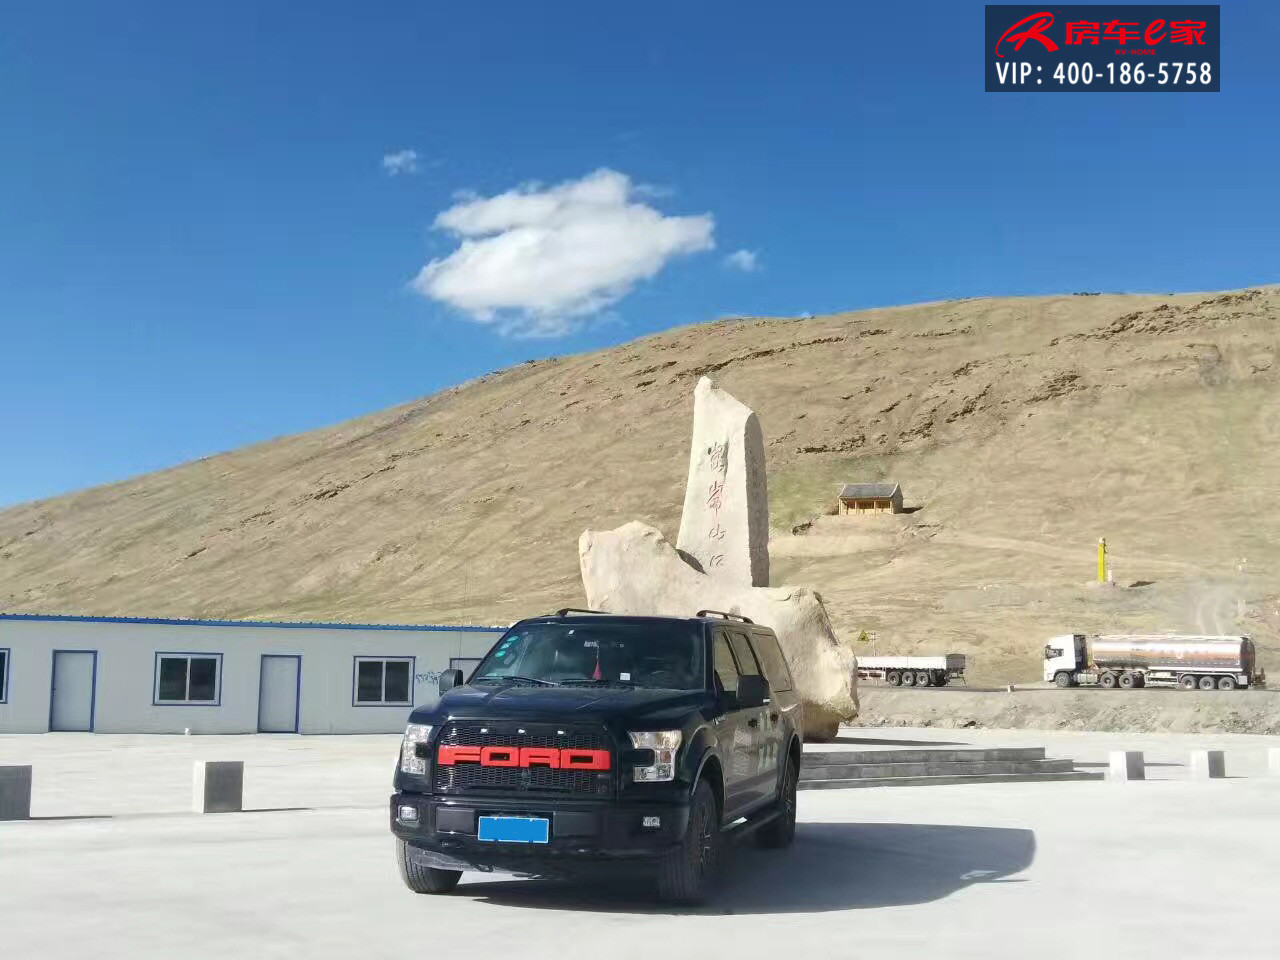 F150福特勇猛者自驾西藏万里行 以性能凌驾巅峰